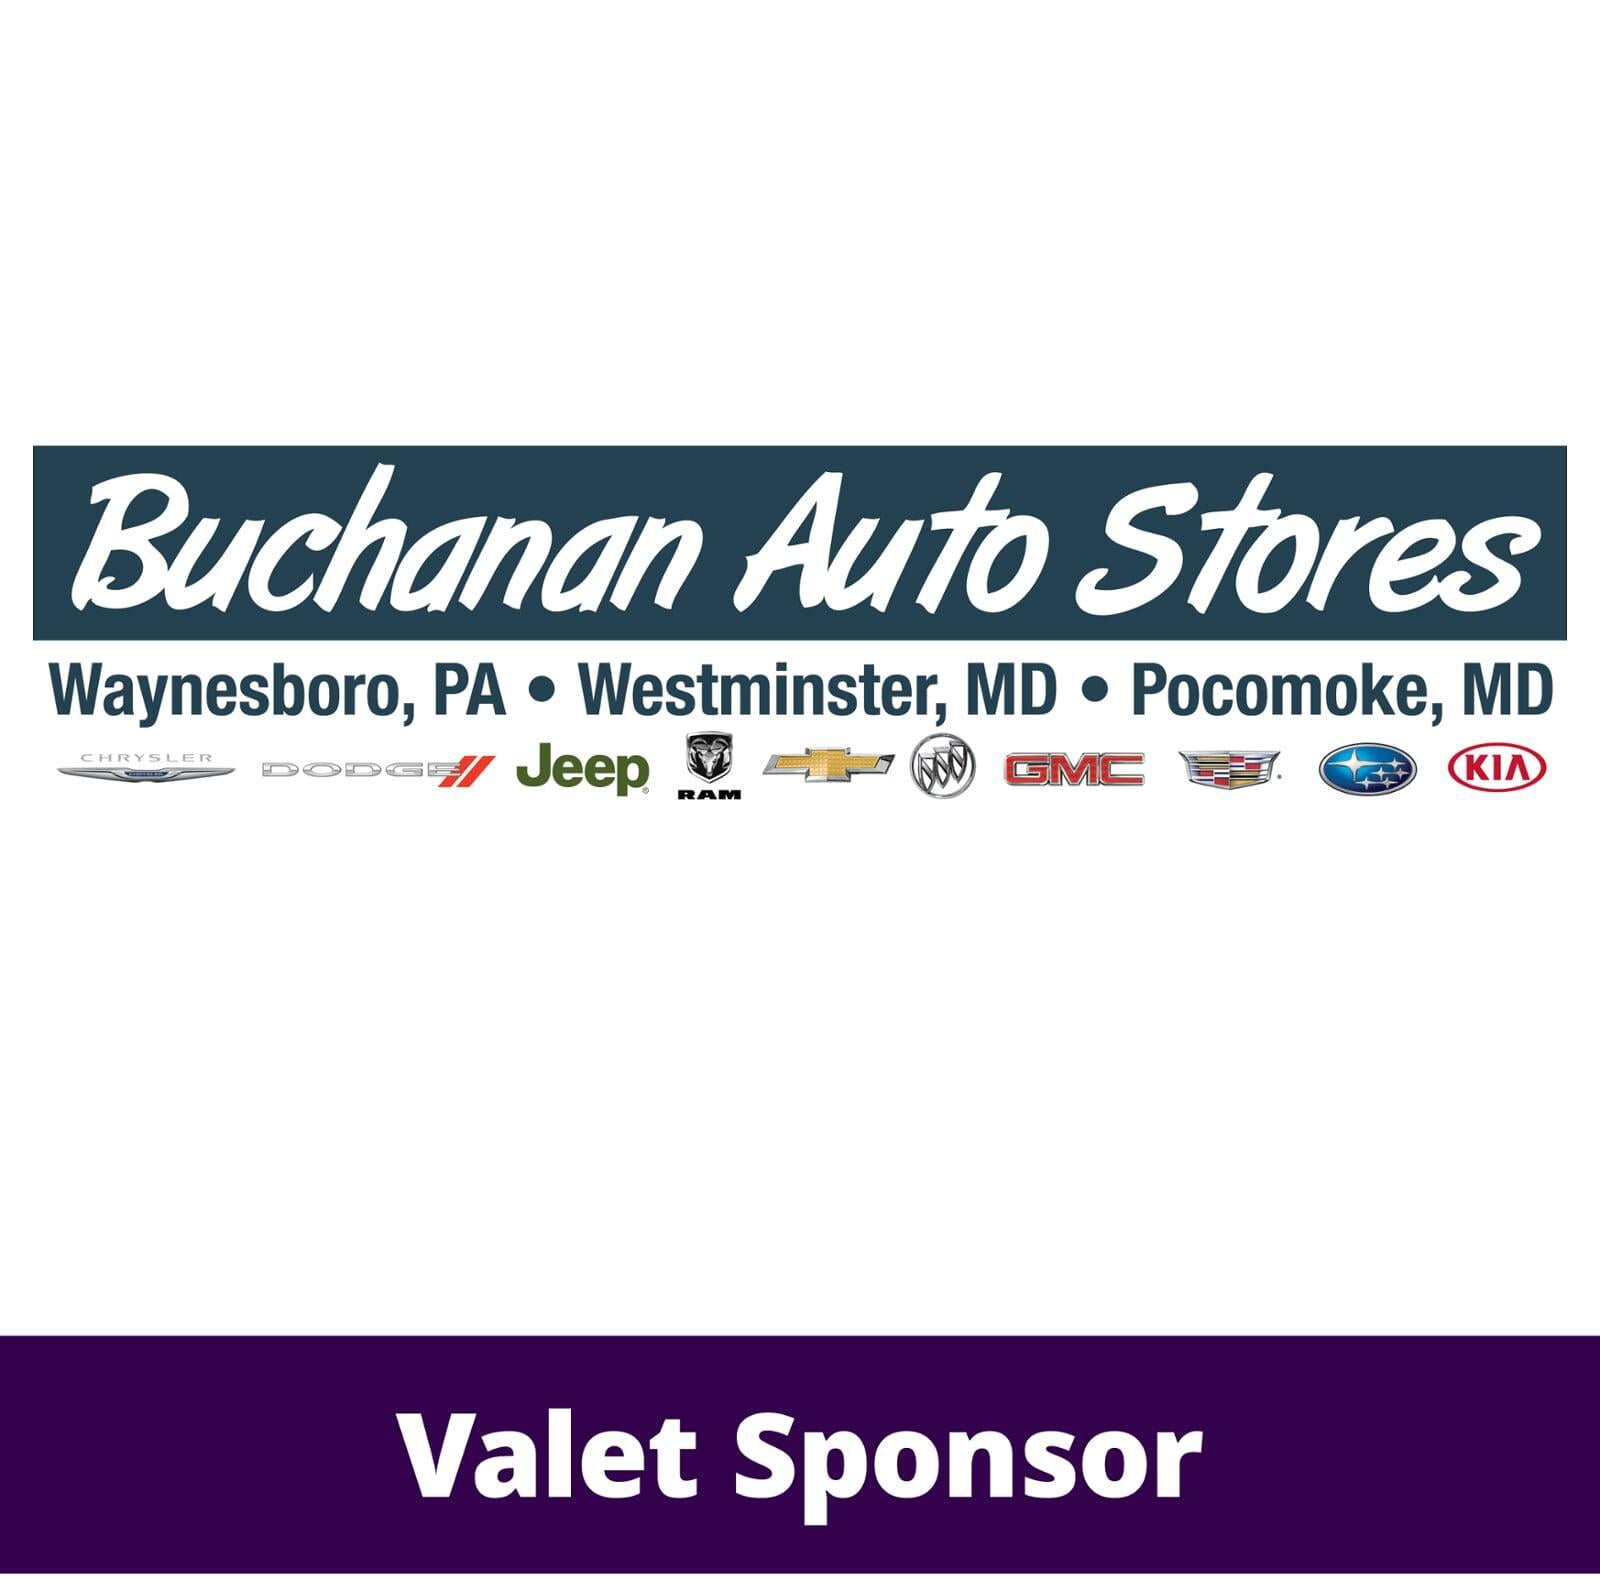 Buchanan Auto Stores logo